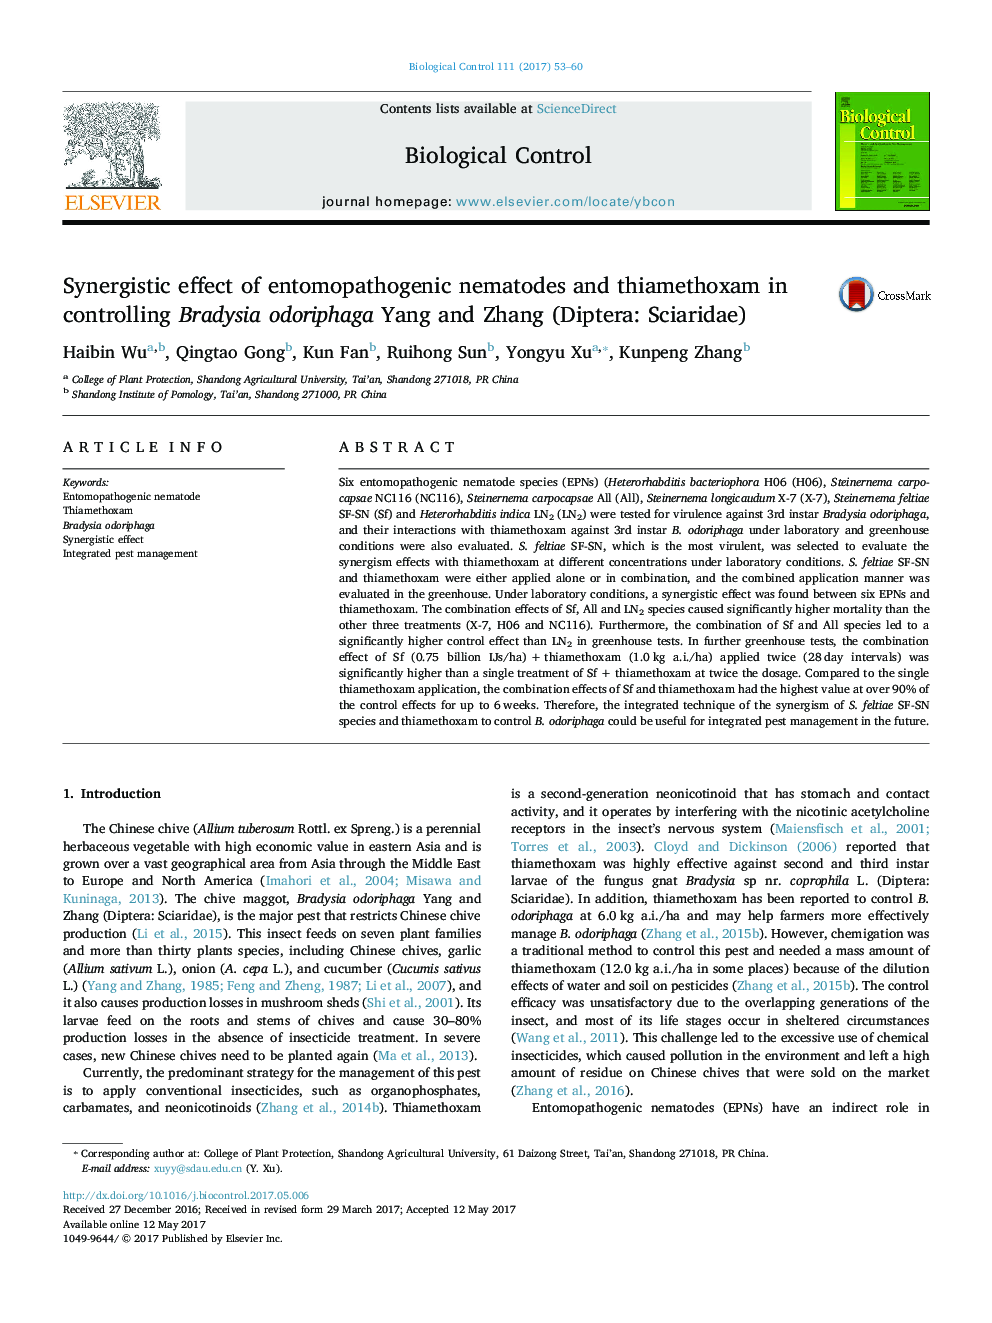 Synergistic effect of entomopathogenic nematodes and thiamethoxam in controlling Bradysia odoriphaga Yang and Zhang (Diptera: Sciaridae)